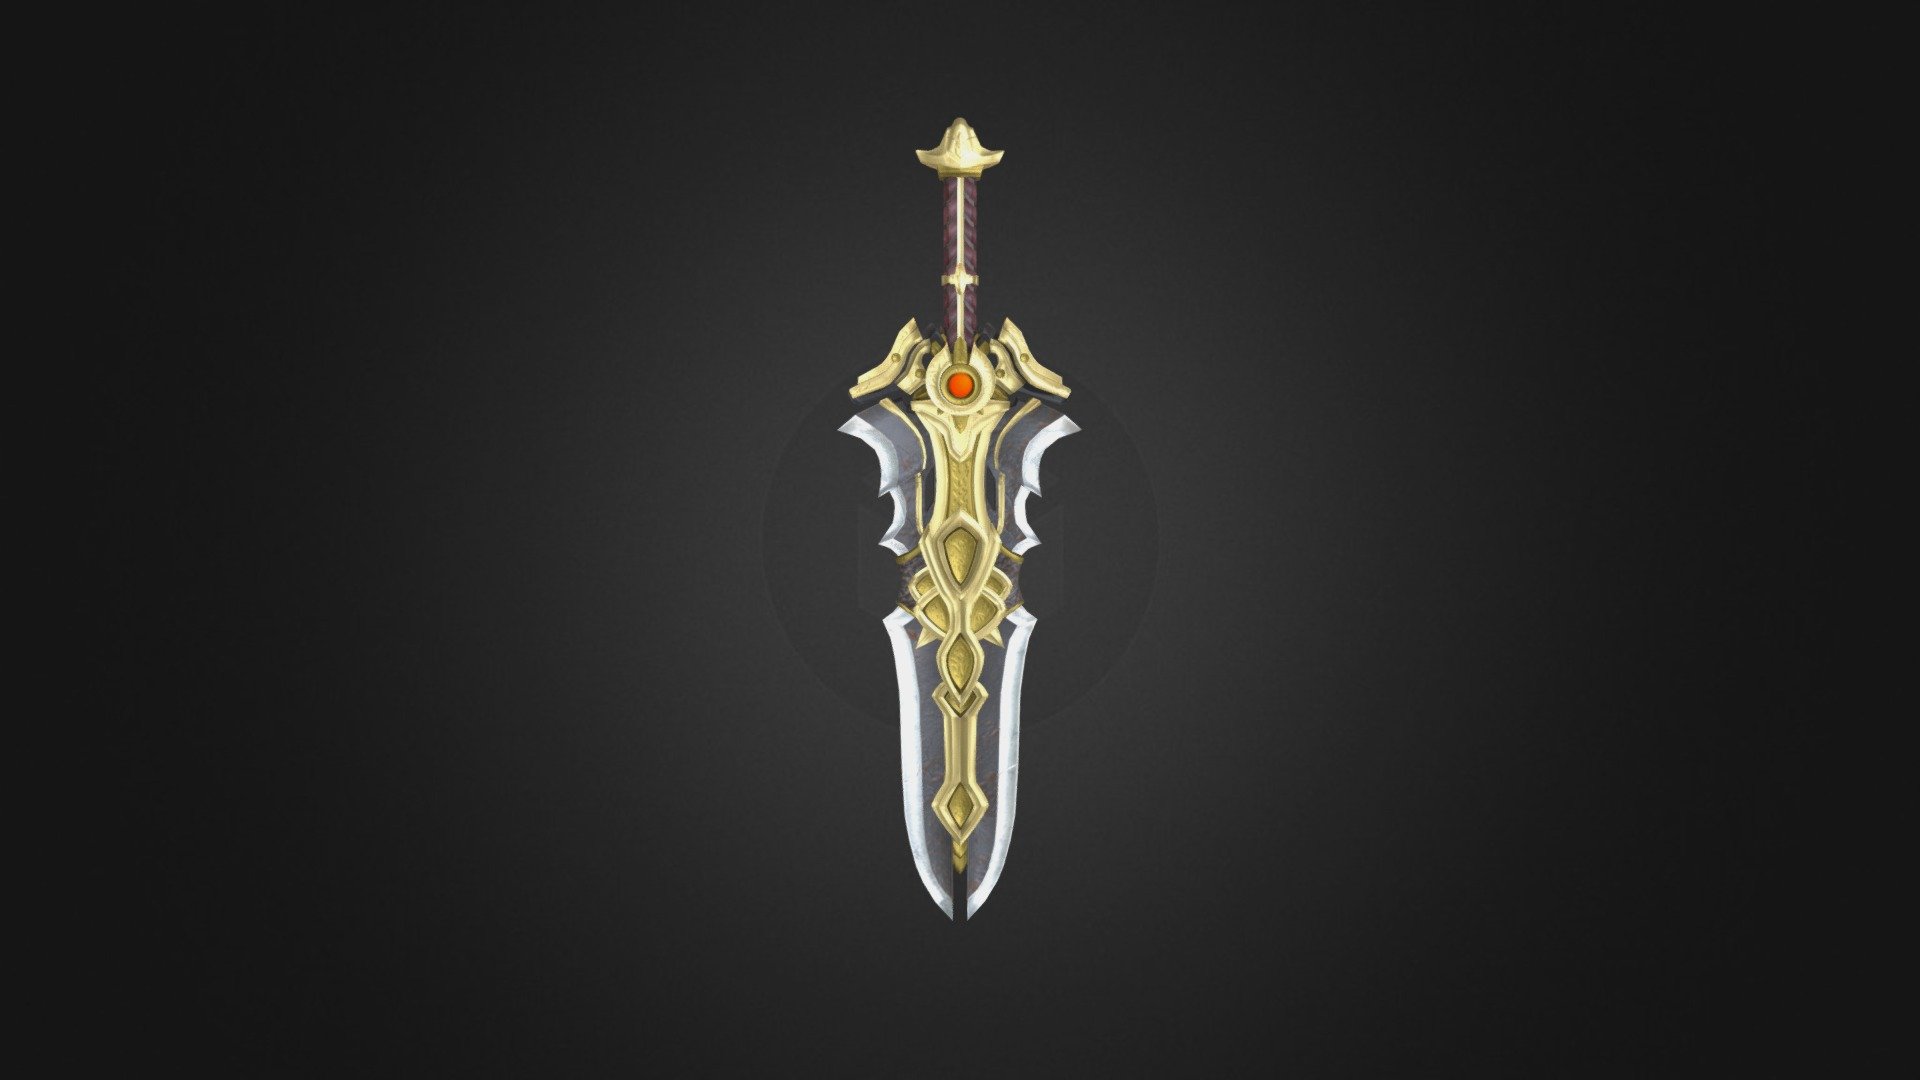 Darksiders inspired sword